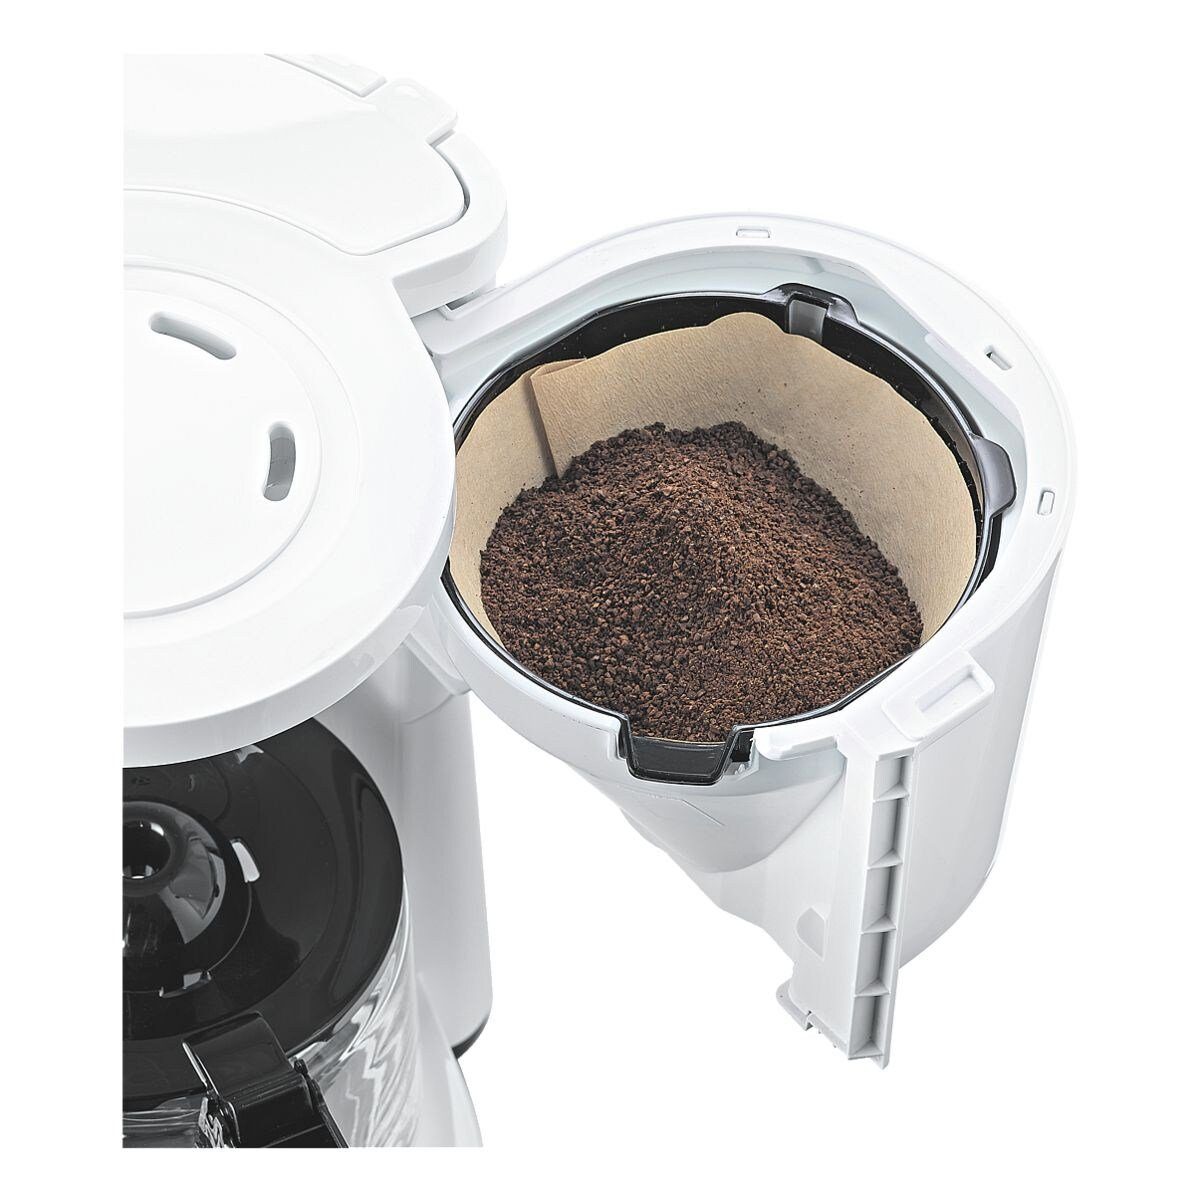 Severin Filterkaffeemaschine KA 4816, weiß Watt bis Kaffeekanne, Kaffeemaschine 10 1.25l mit 1000 Tassen, Glaskanne